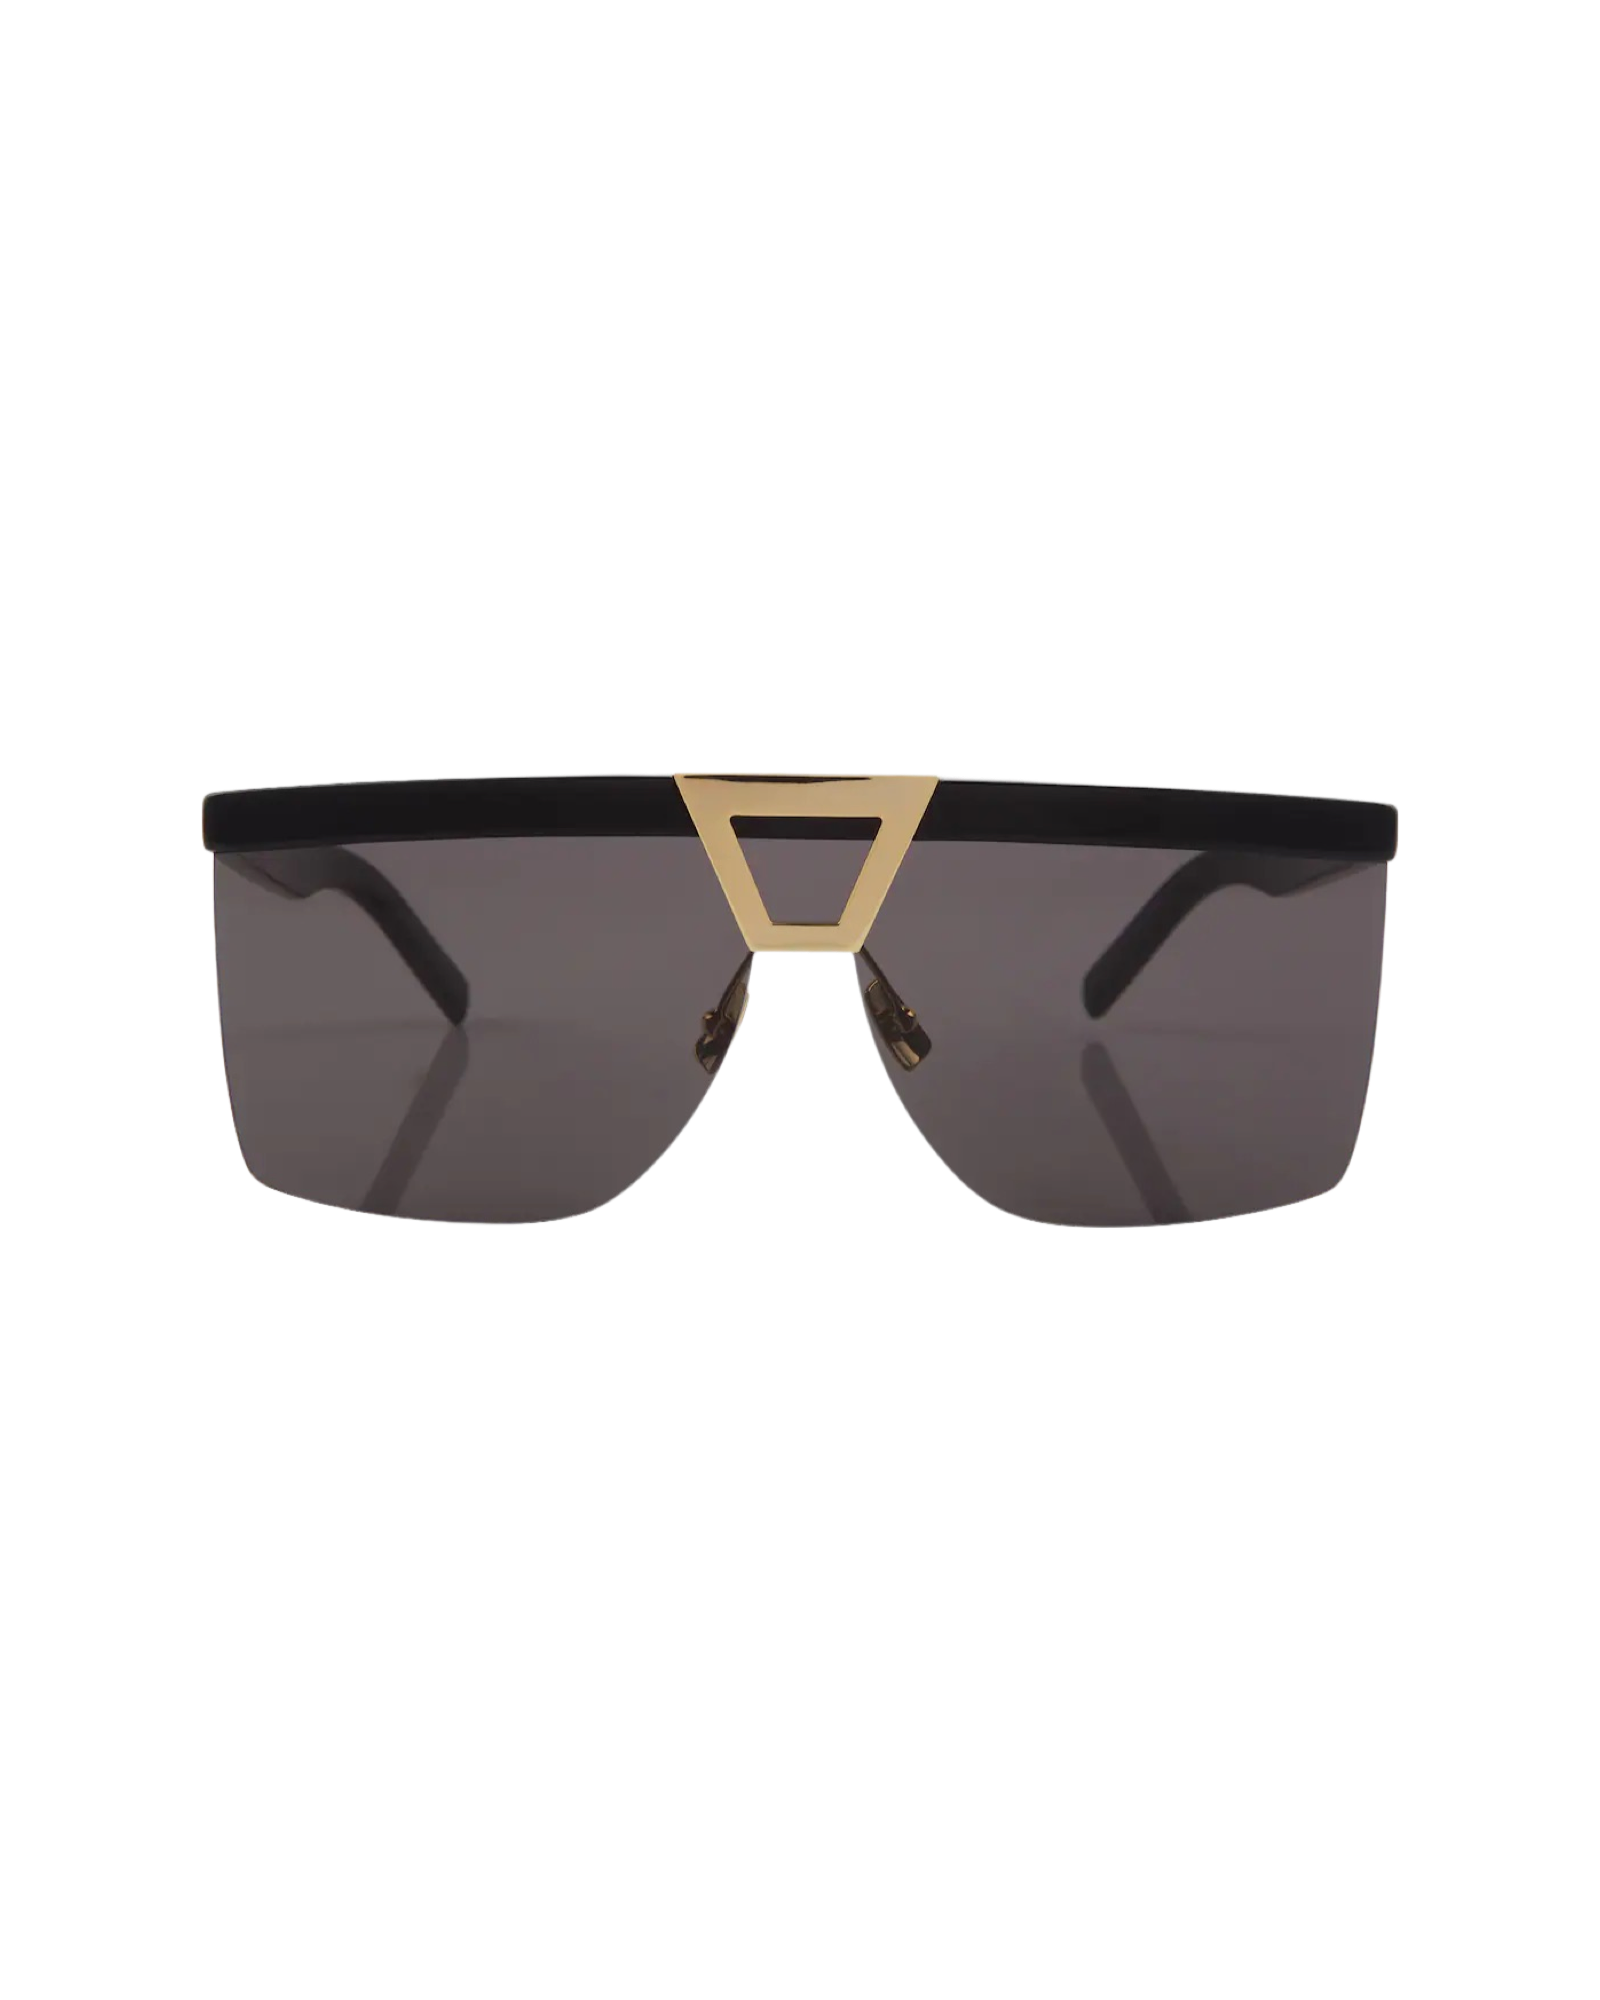 SL 537 square sunglasses